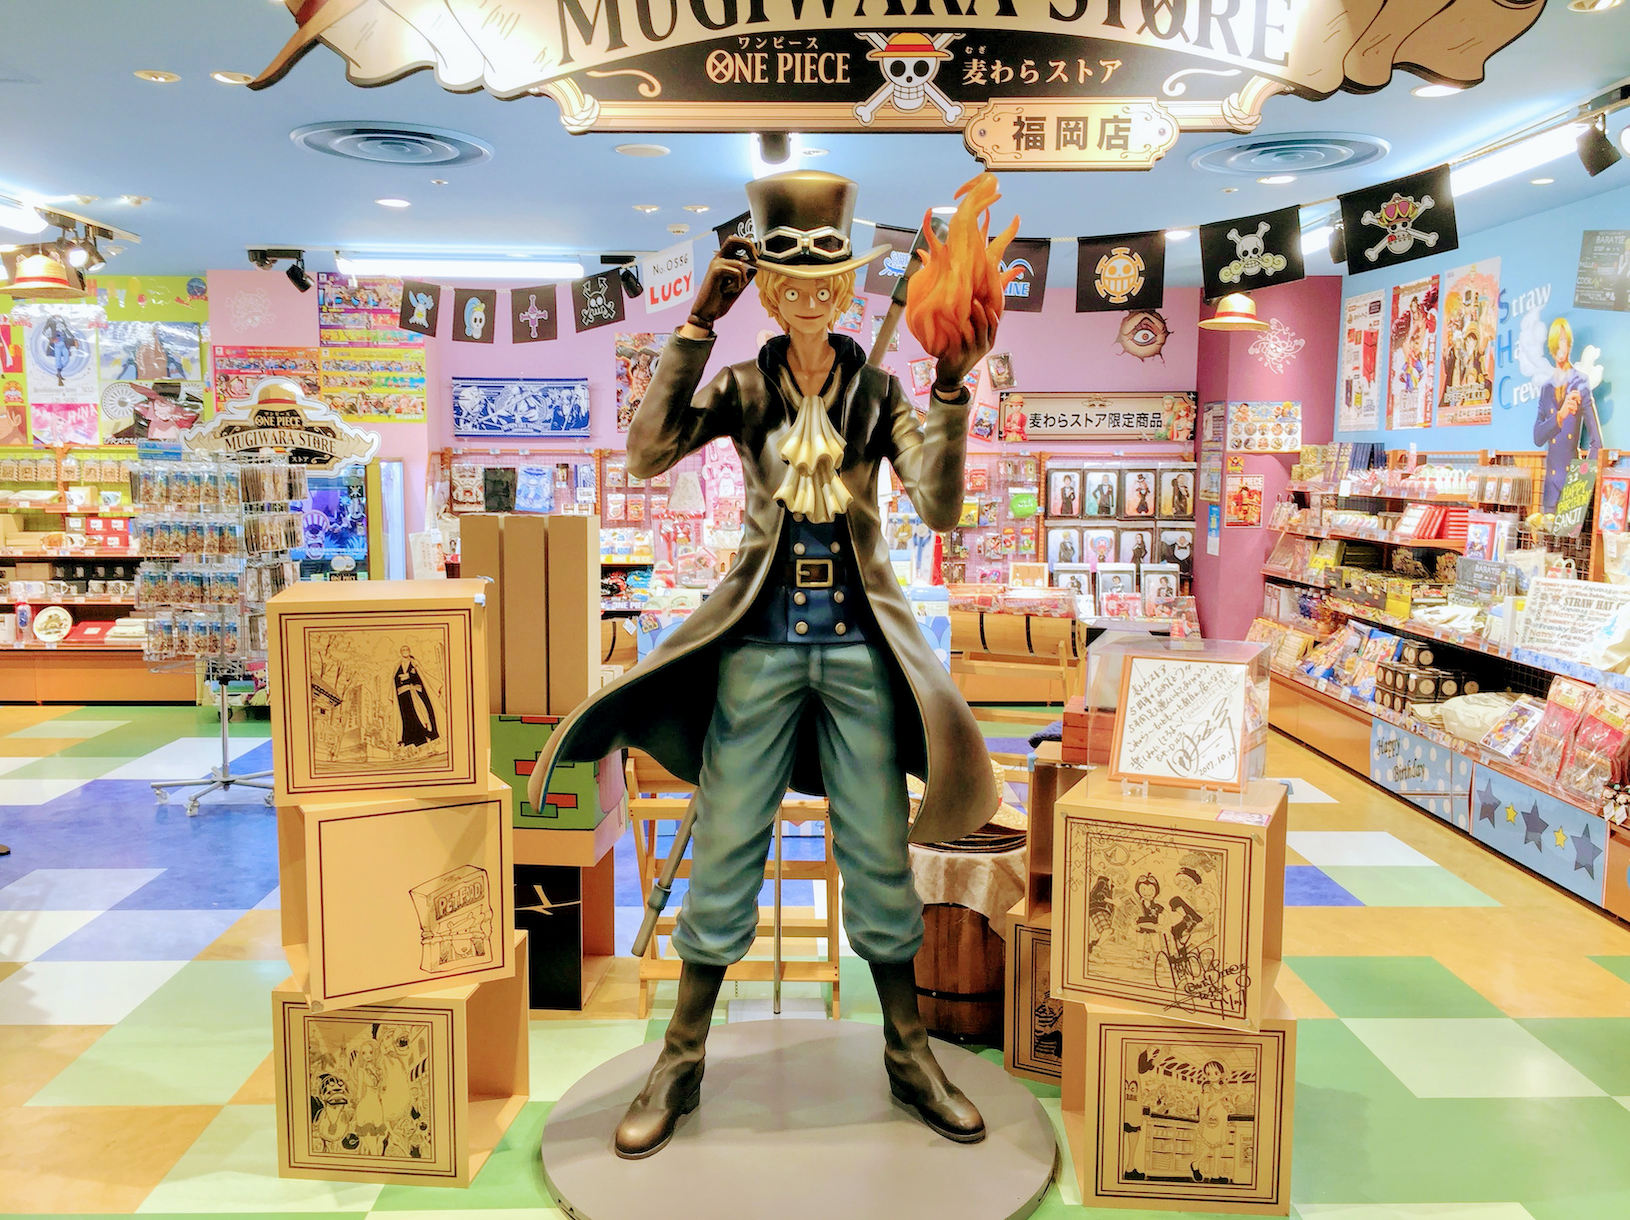 Comprar Merchandising One Piece, Tienda Online